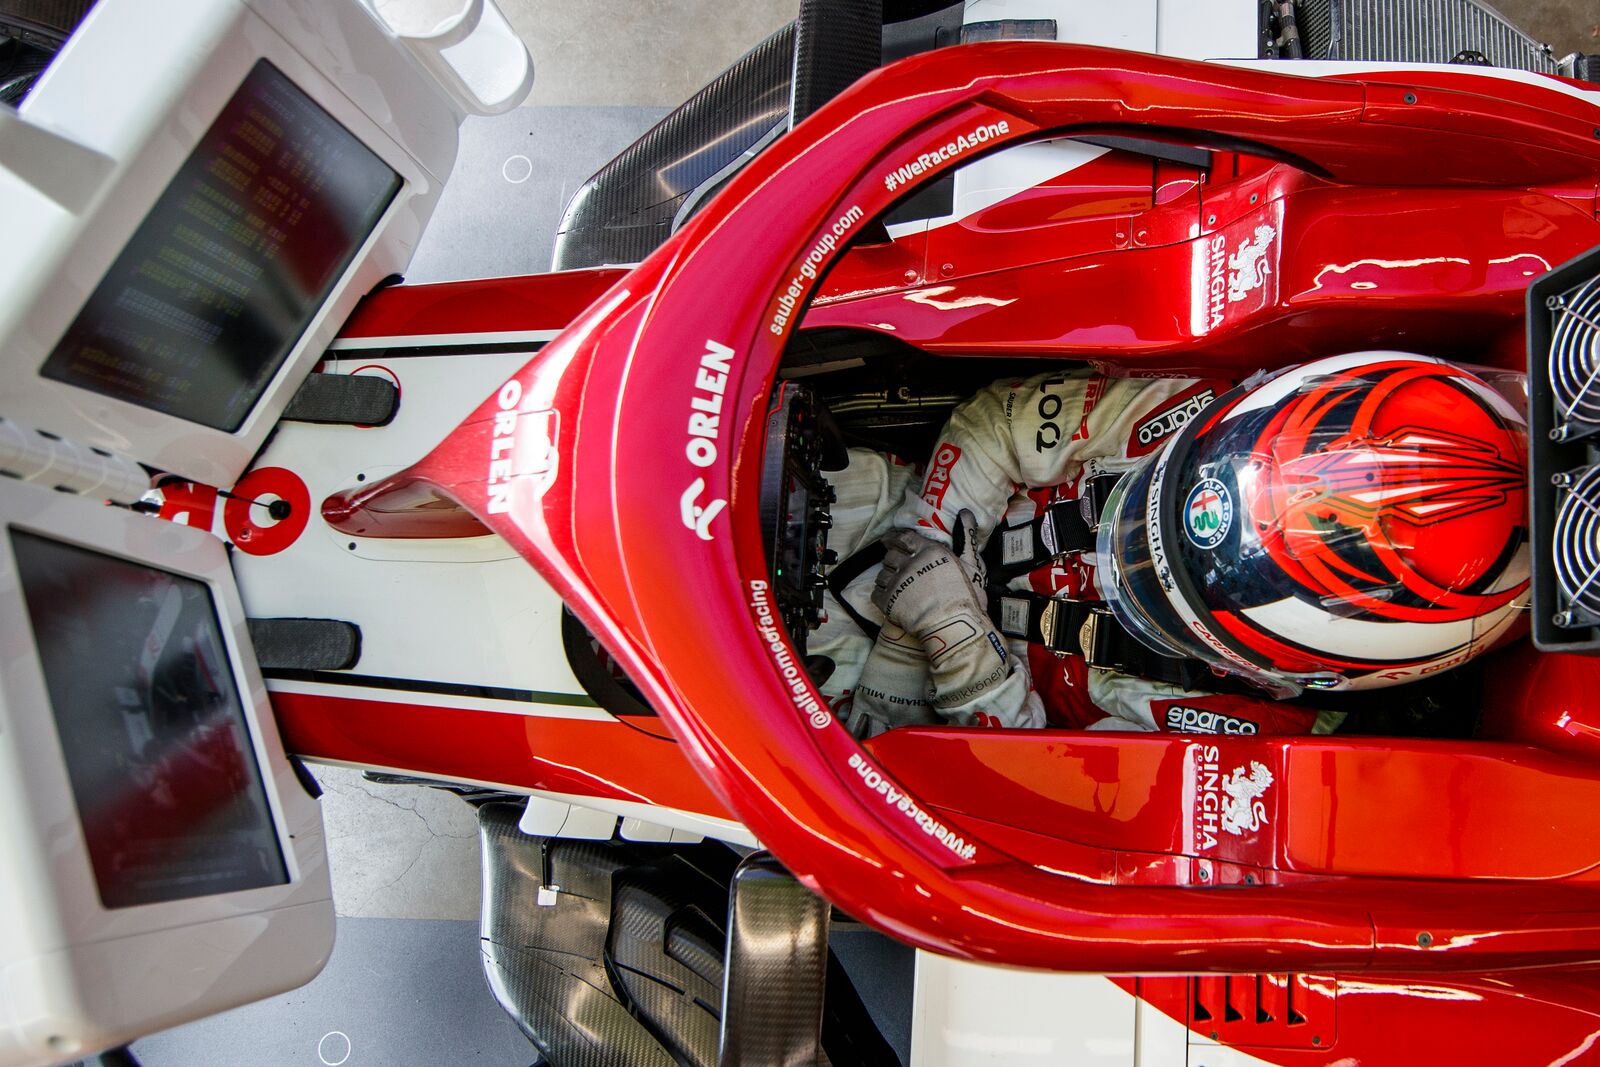 Kimi Raikkonen notches up his 323rd Formula 1 race at the 2020 Eifel Grand Prix